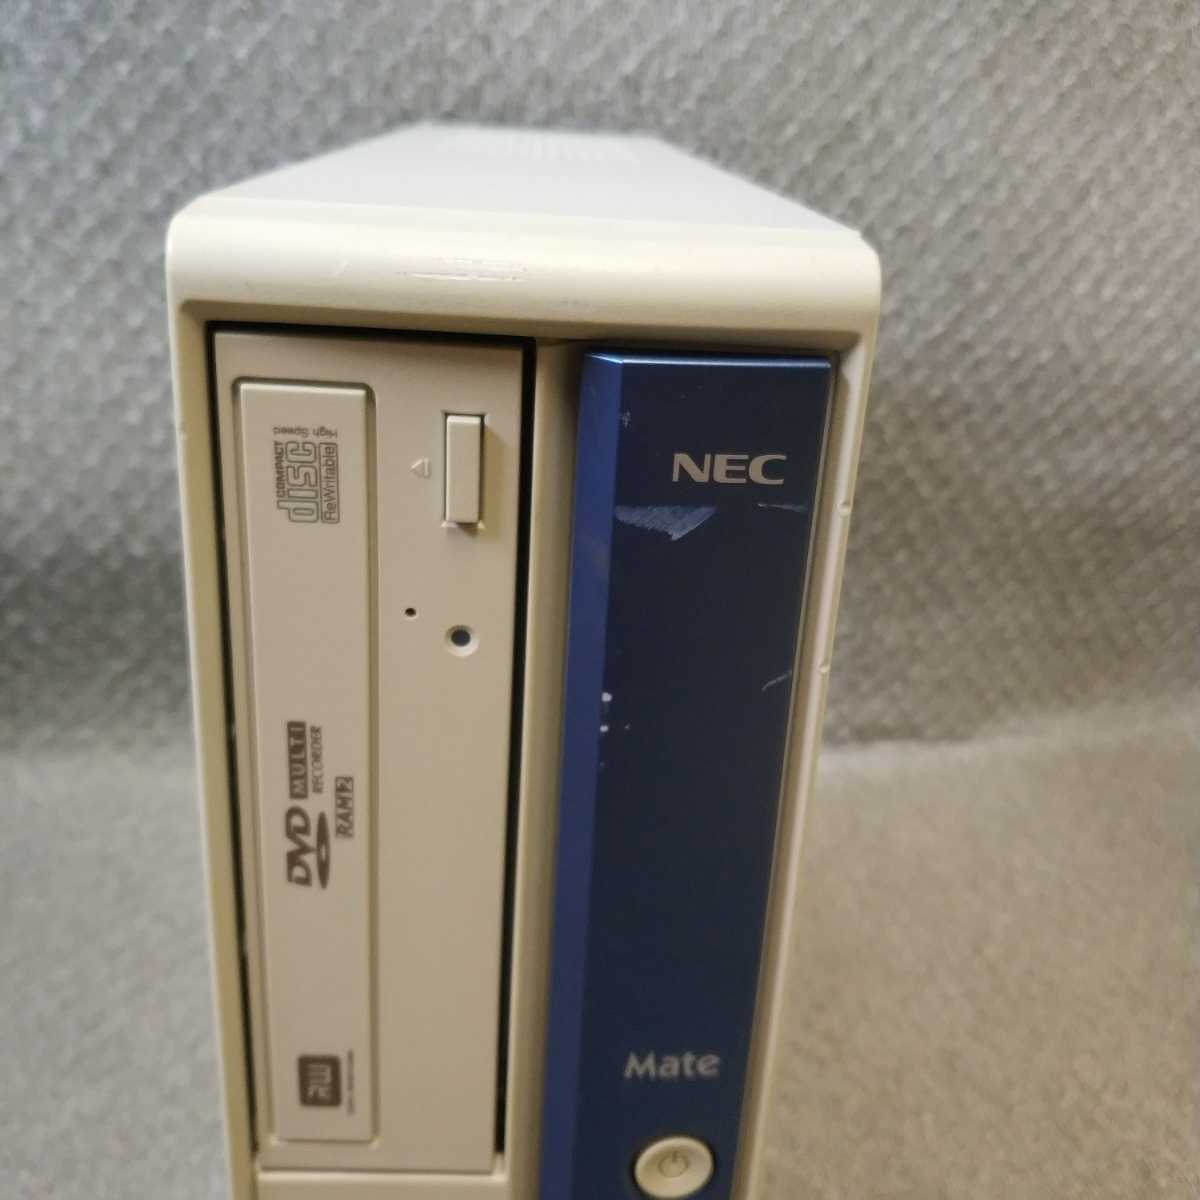 Windows XP・Vista・7・10 OS選択可 NEC Mate MB-B Core i5-650 3.20GHz/メモ4GB/HDD160GB/FDD/便利ソフト/リカバリー作成/T072e_画像6